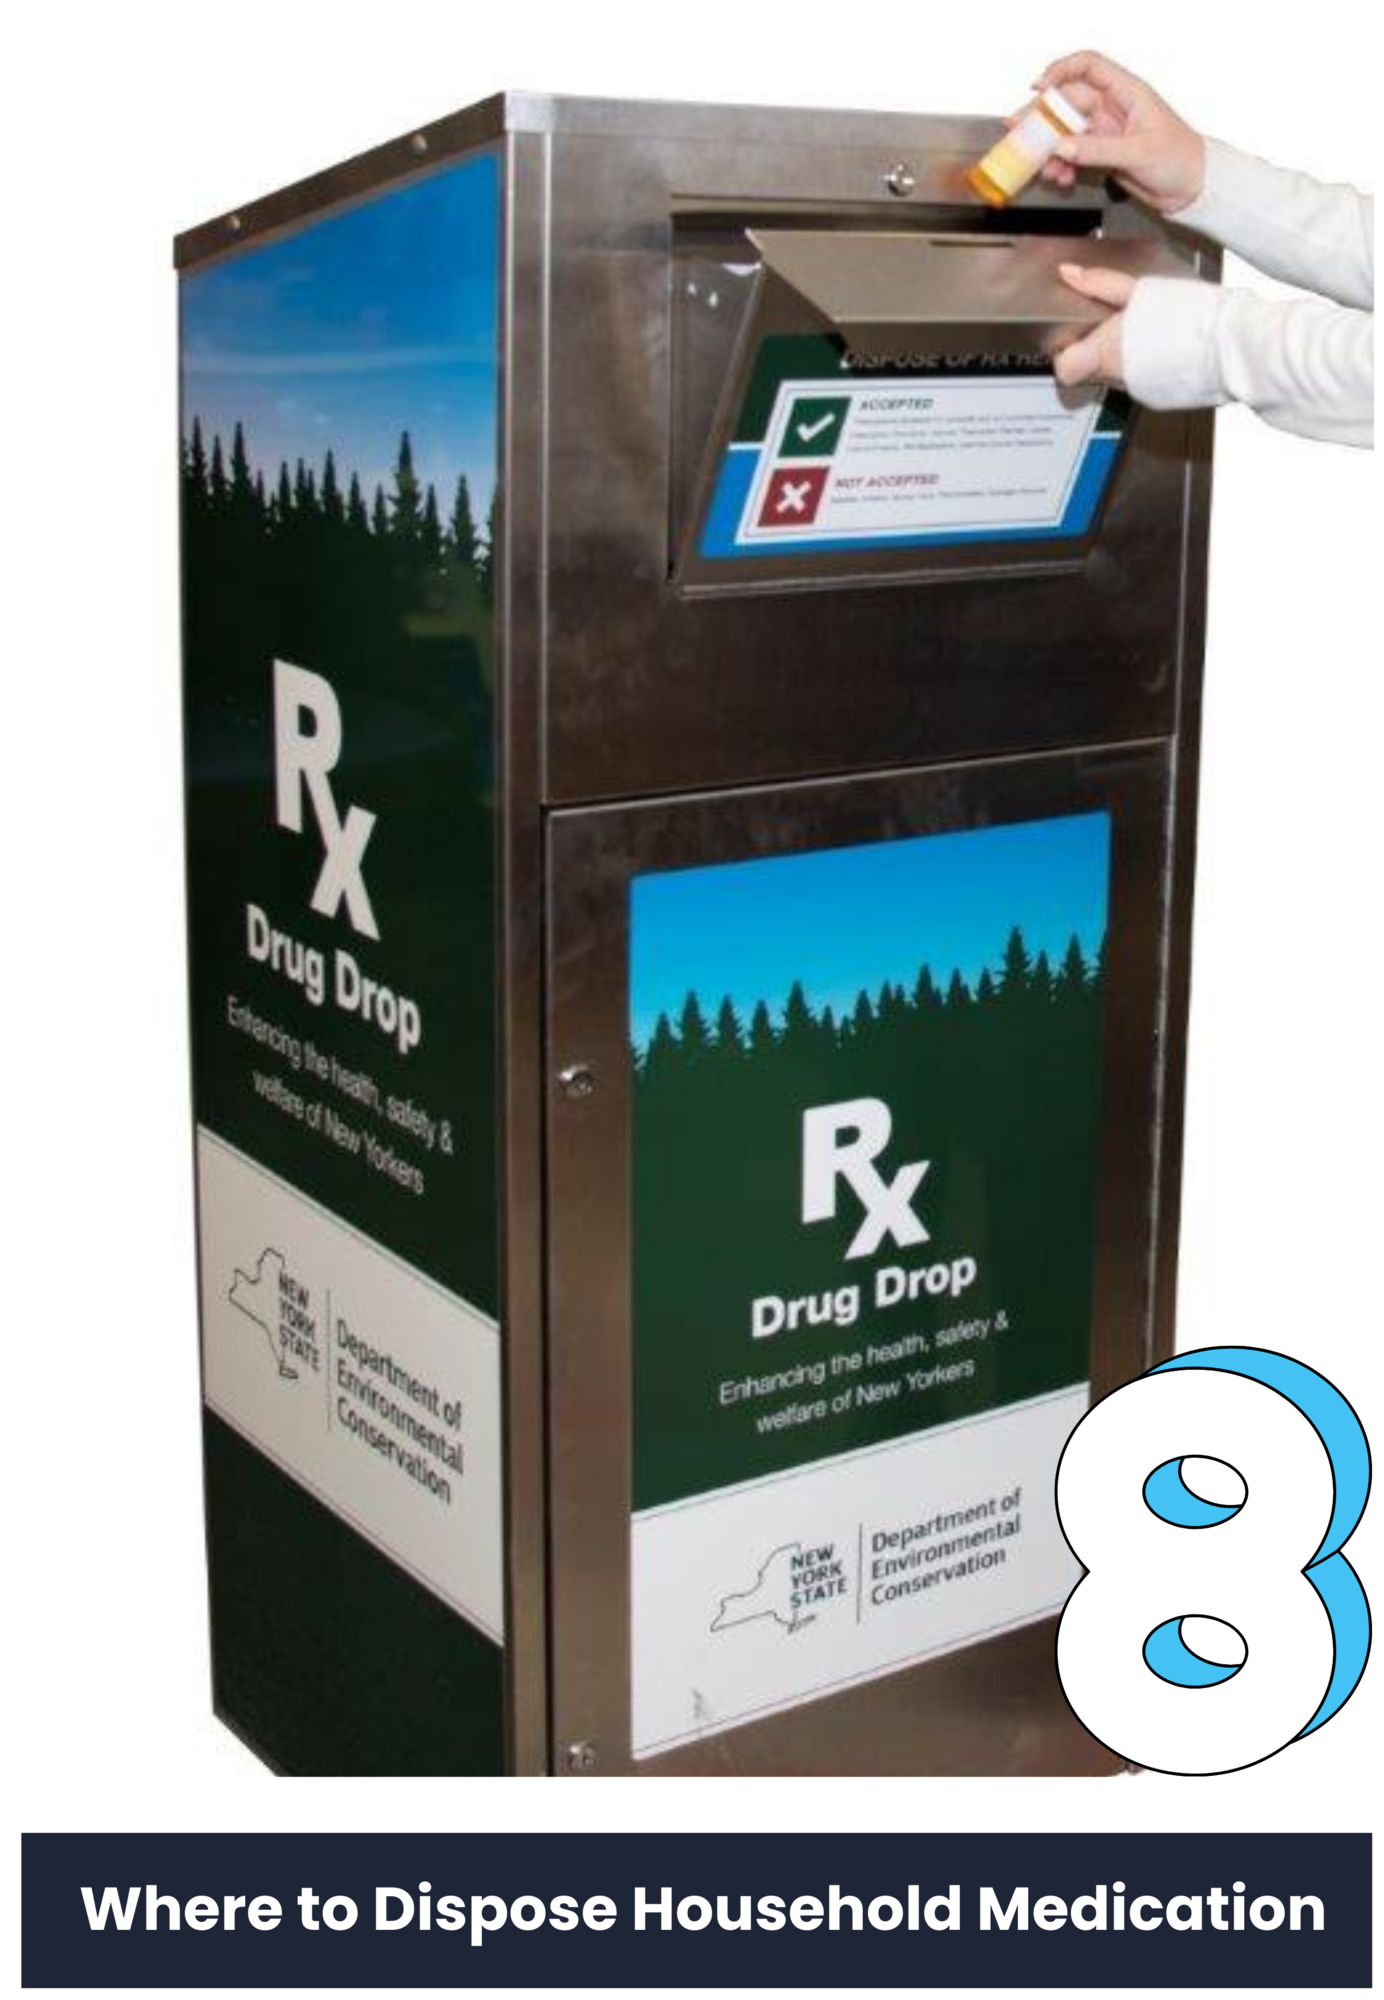 An individual placing drugs in a NYS DEC Rx Drug Drop bin